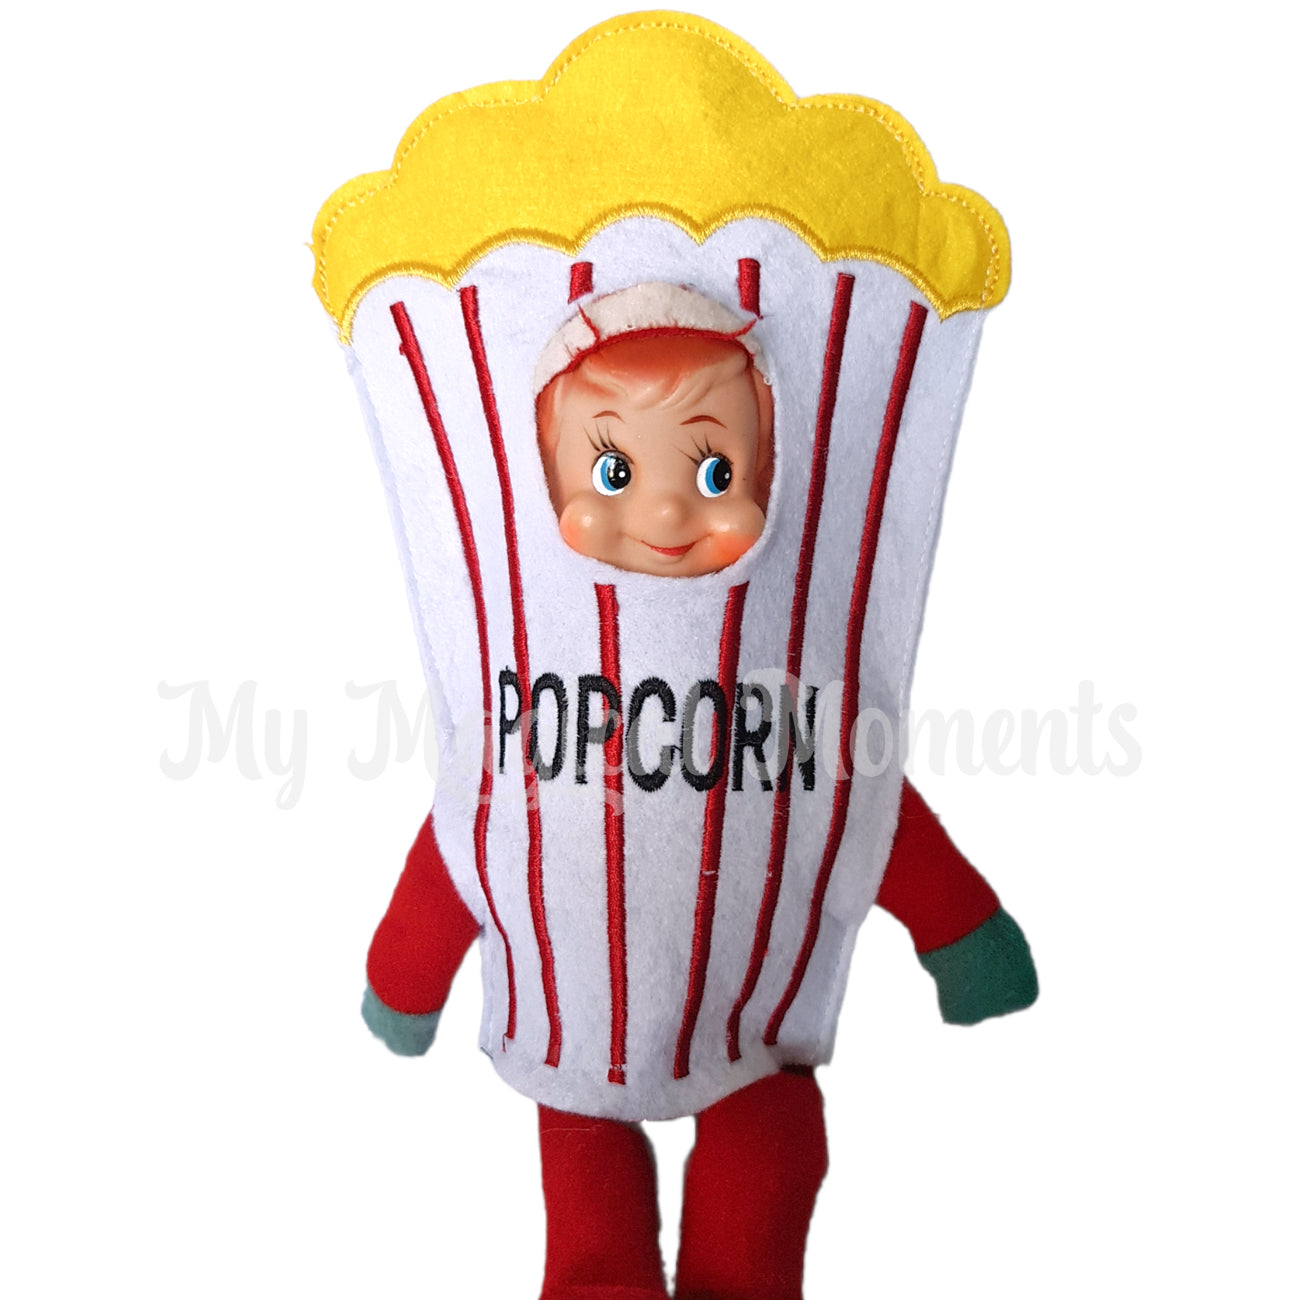 vintage elf wearing a popcorn costume